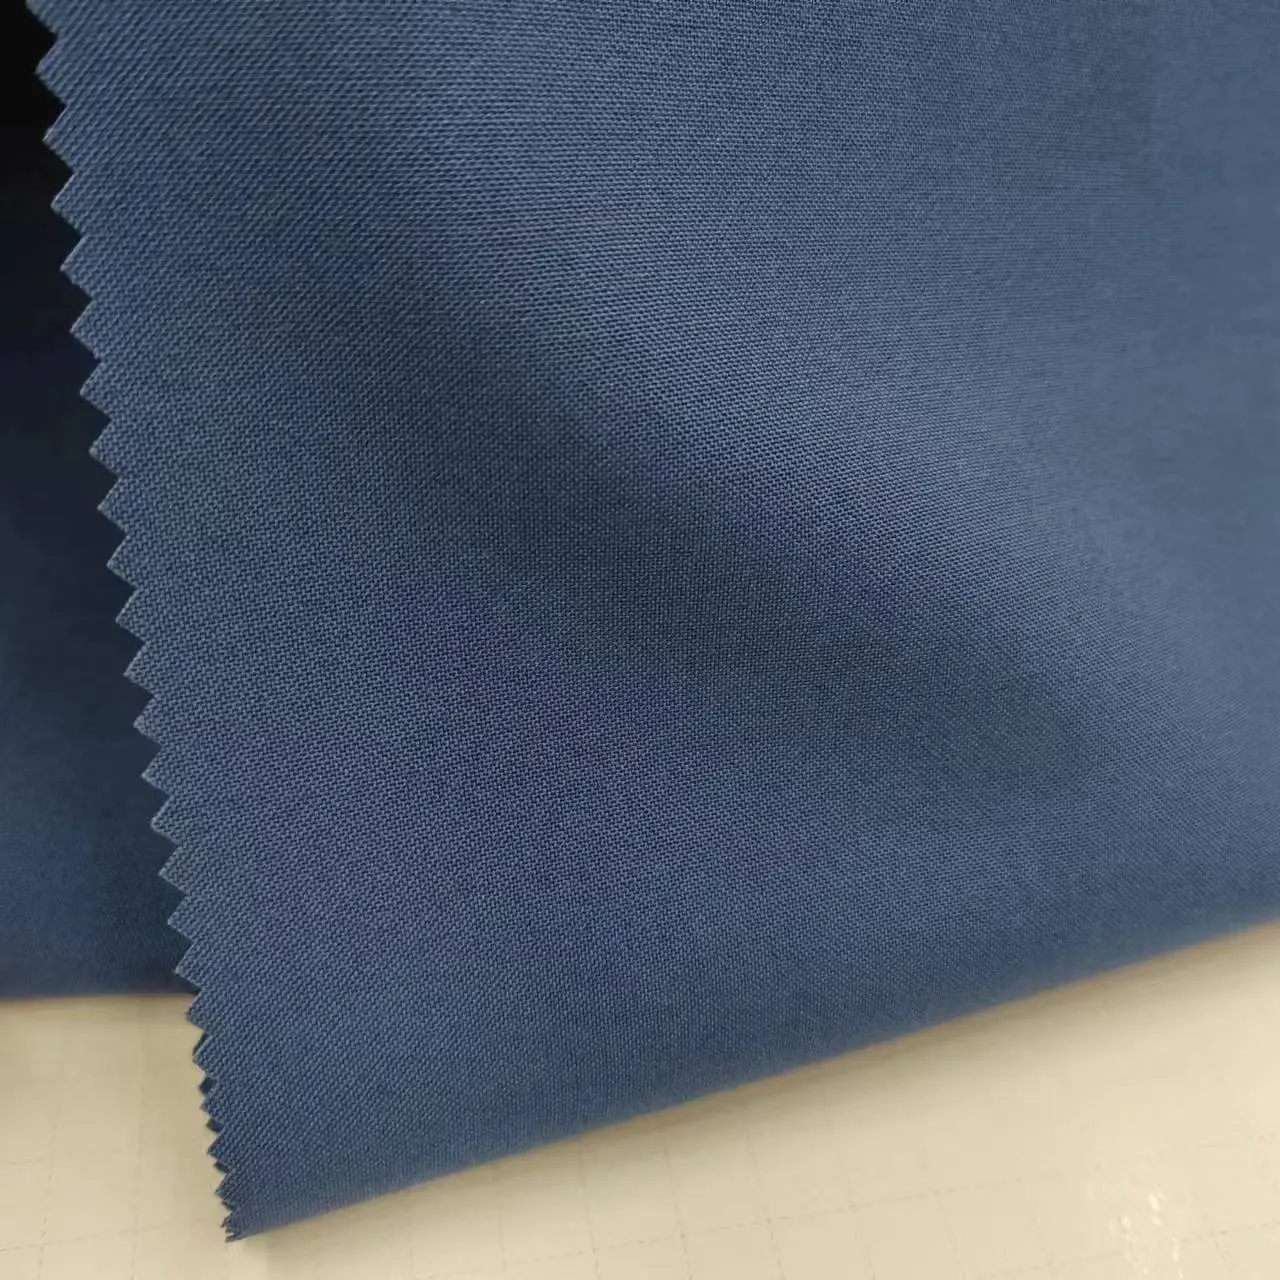 Anti-pilling finishing TR Polyester Rayon plain fabric for uniform students steward